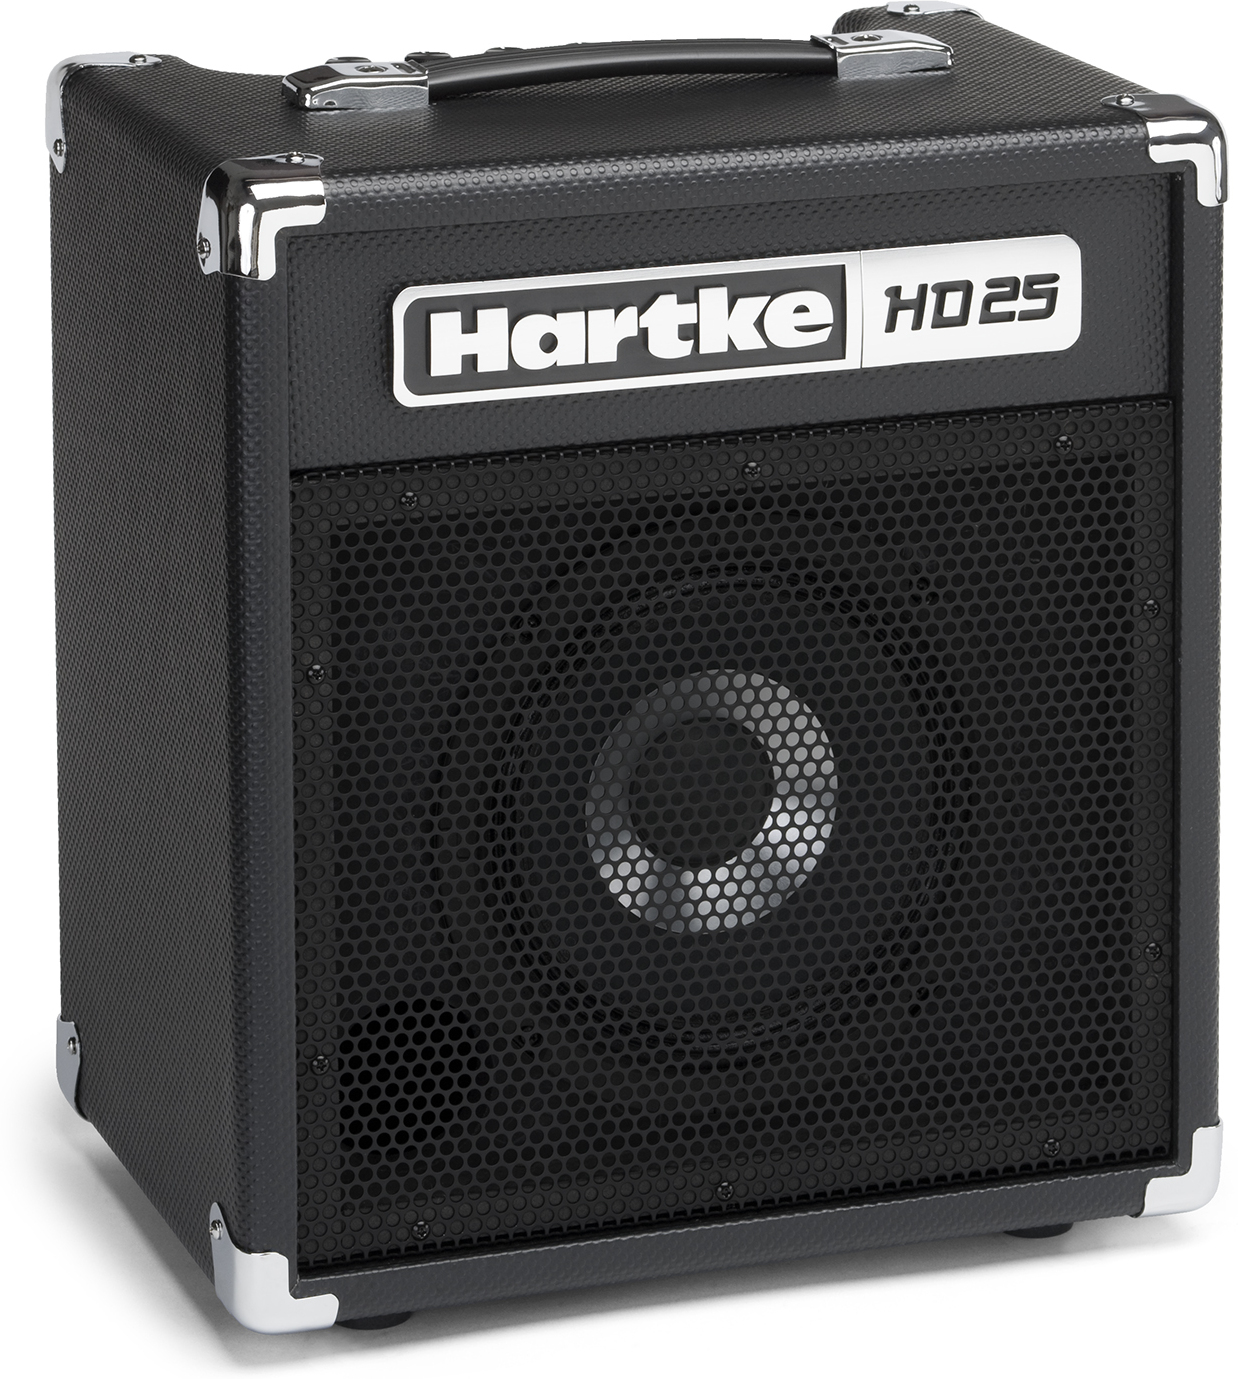 Hartke Hd25 Combo - Bass combo amp - Main picture